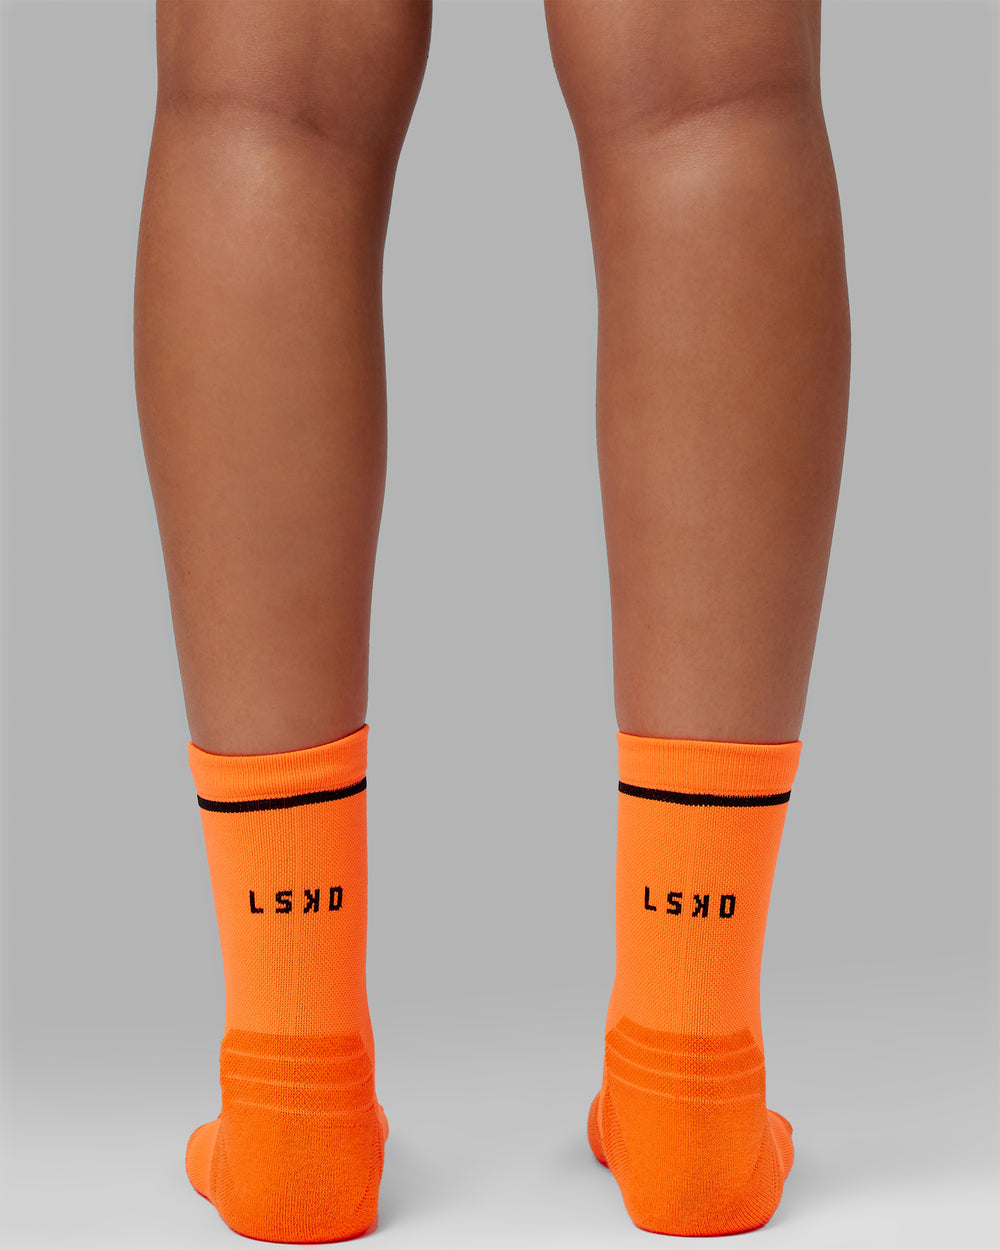 Fast Performance Quarter Socks - Neon Orange-Black